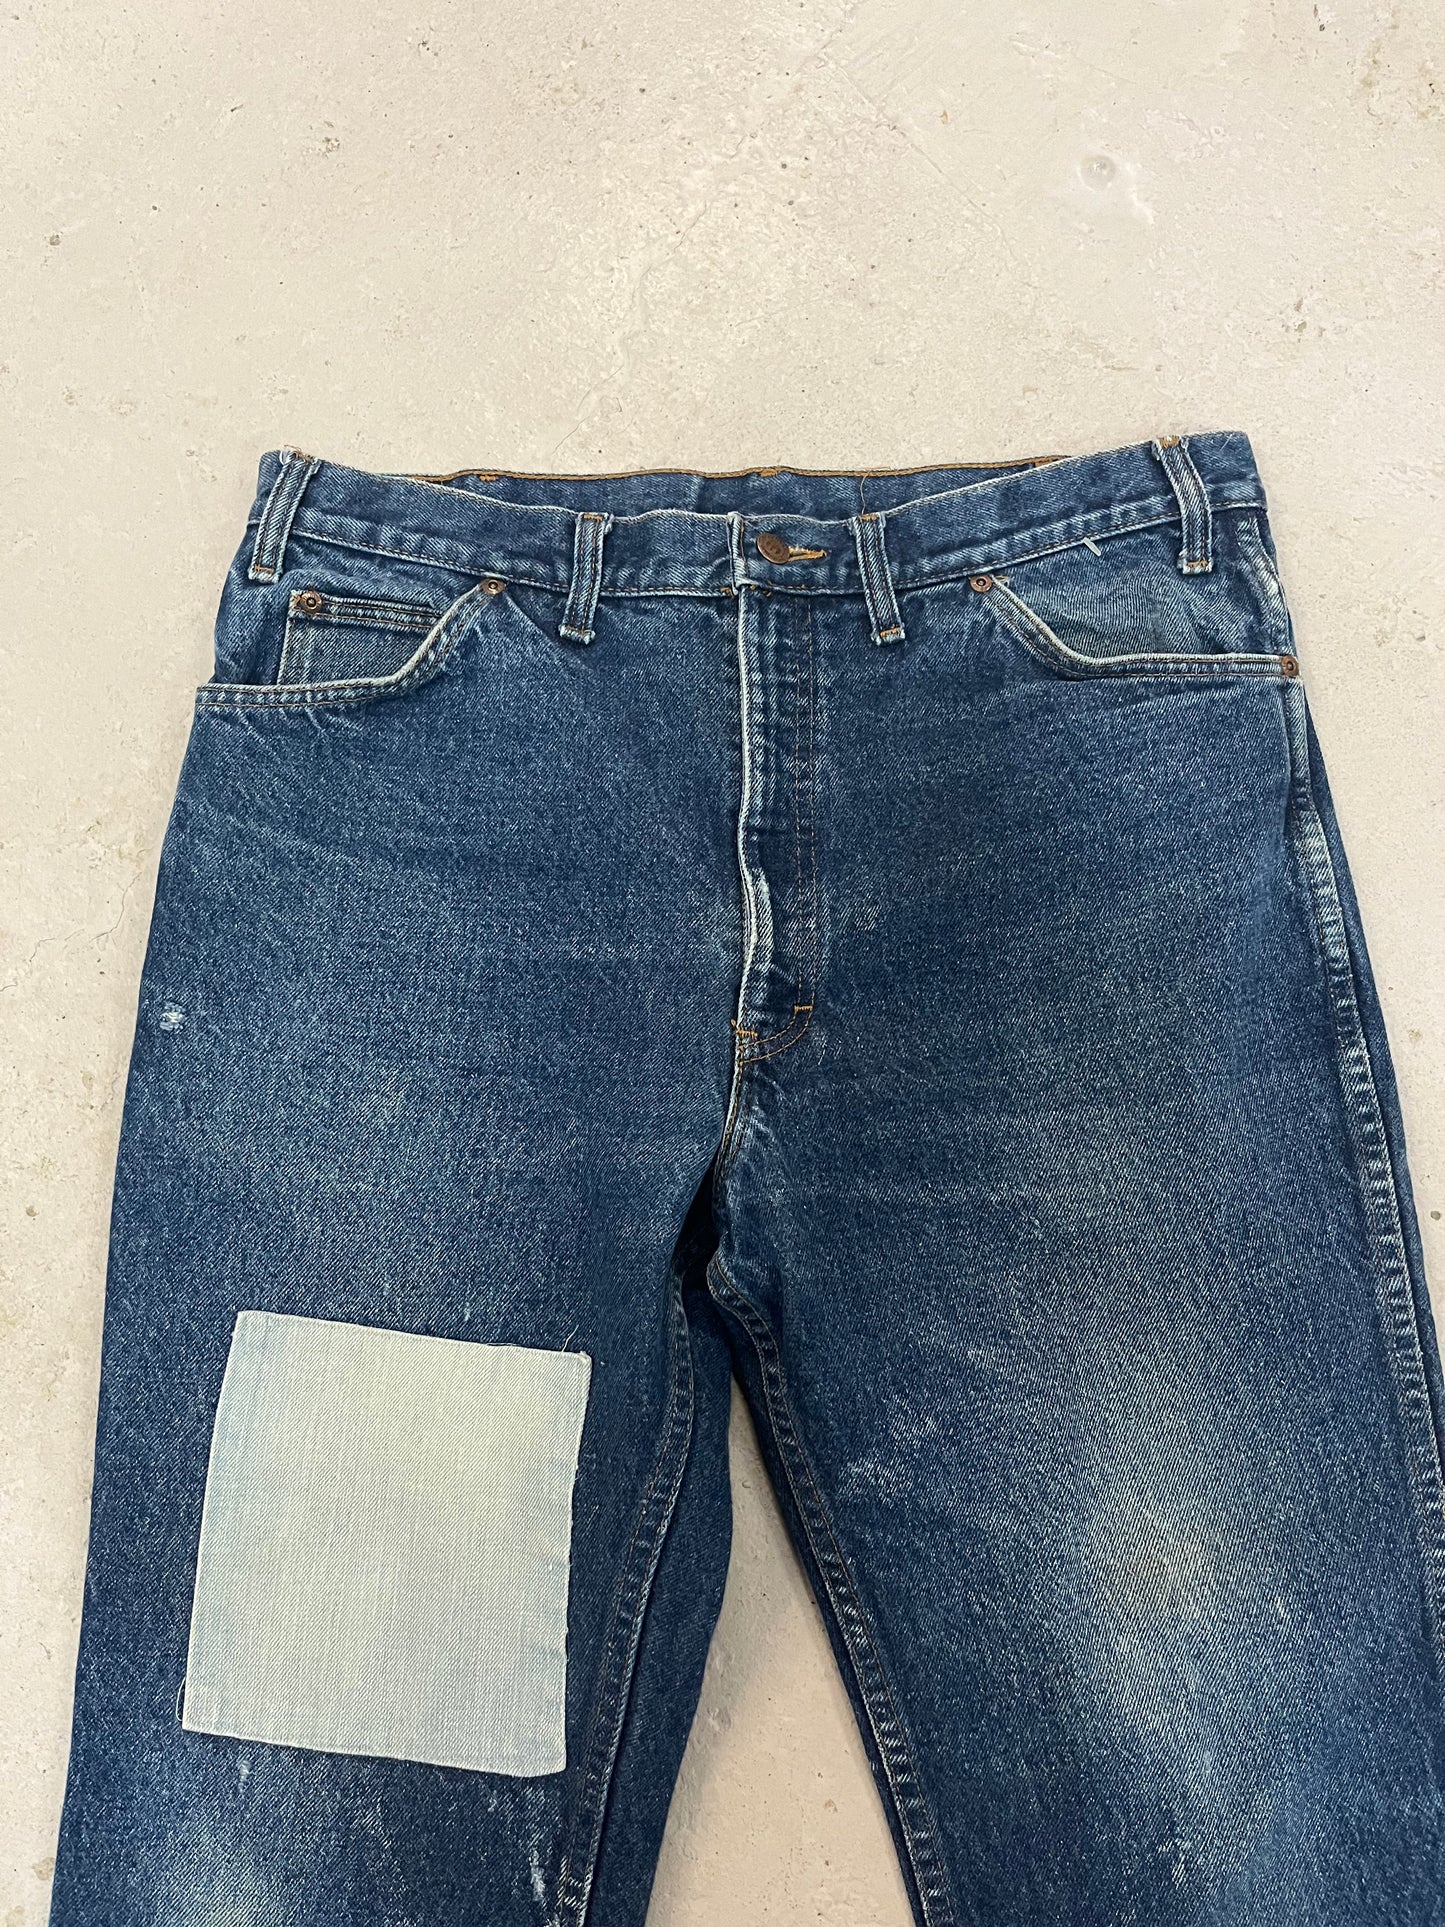 90’s Vintage Patched Distressed Dark Wash Jeans / 37 Waist